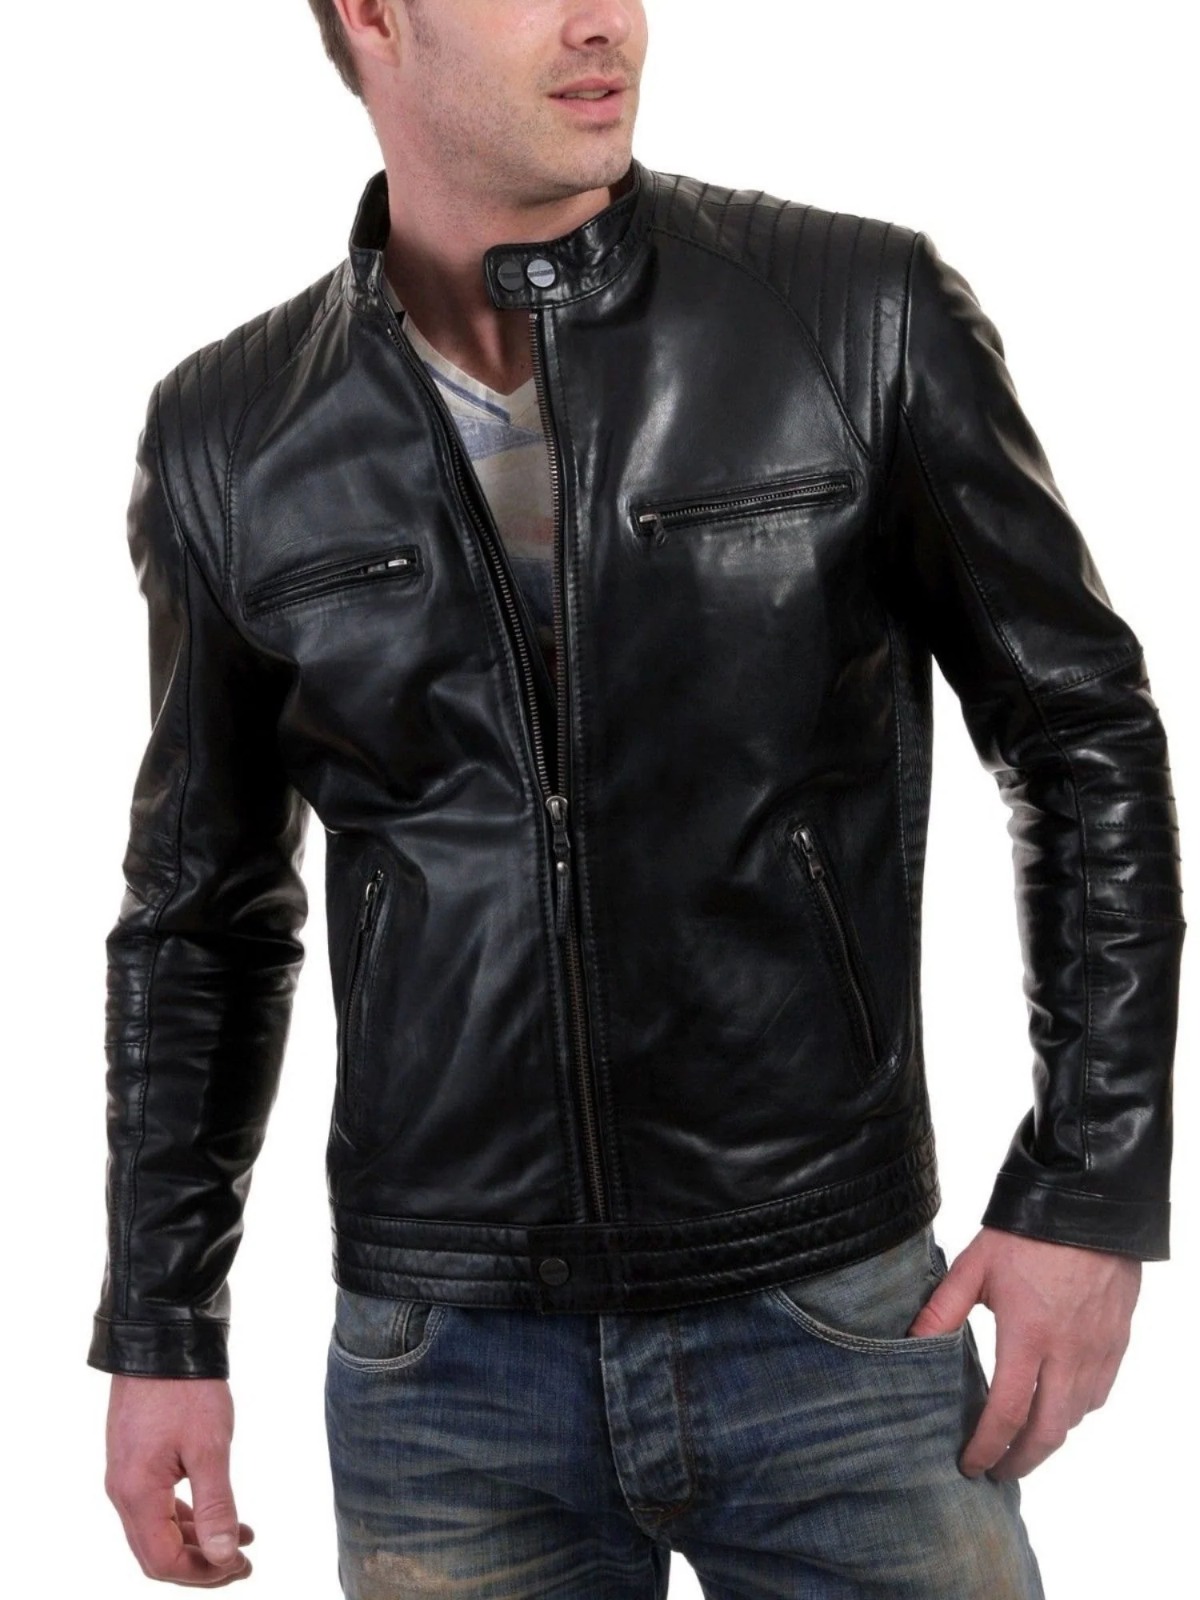 LINDSEY STREET Genuine Leather Jacket for Women Slim Fit Leather Jacke